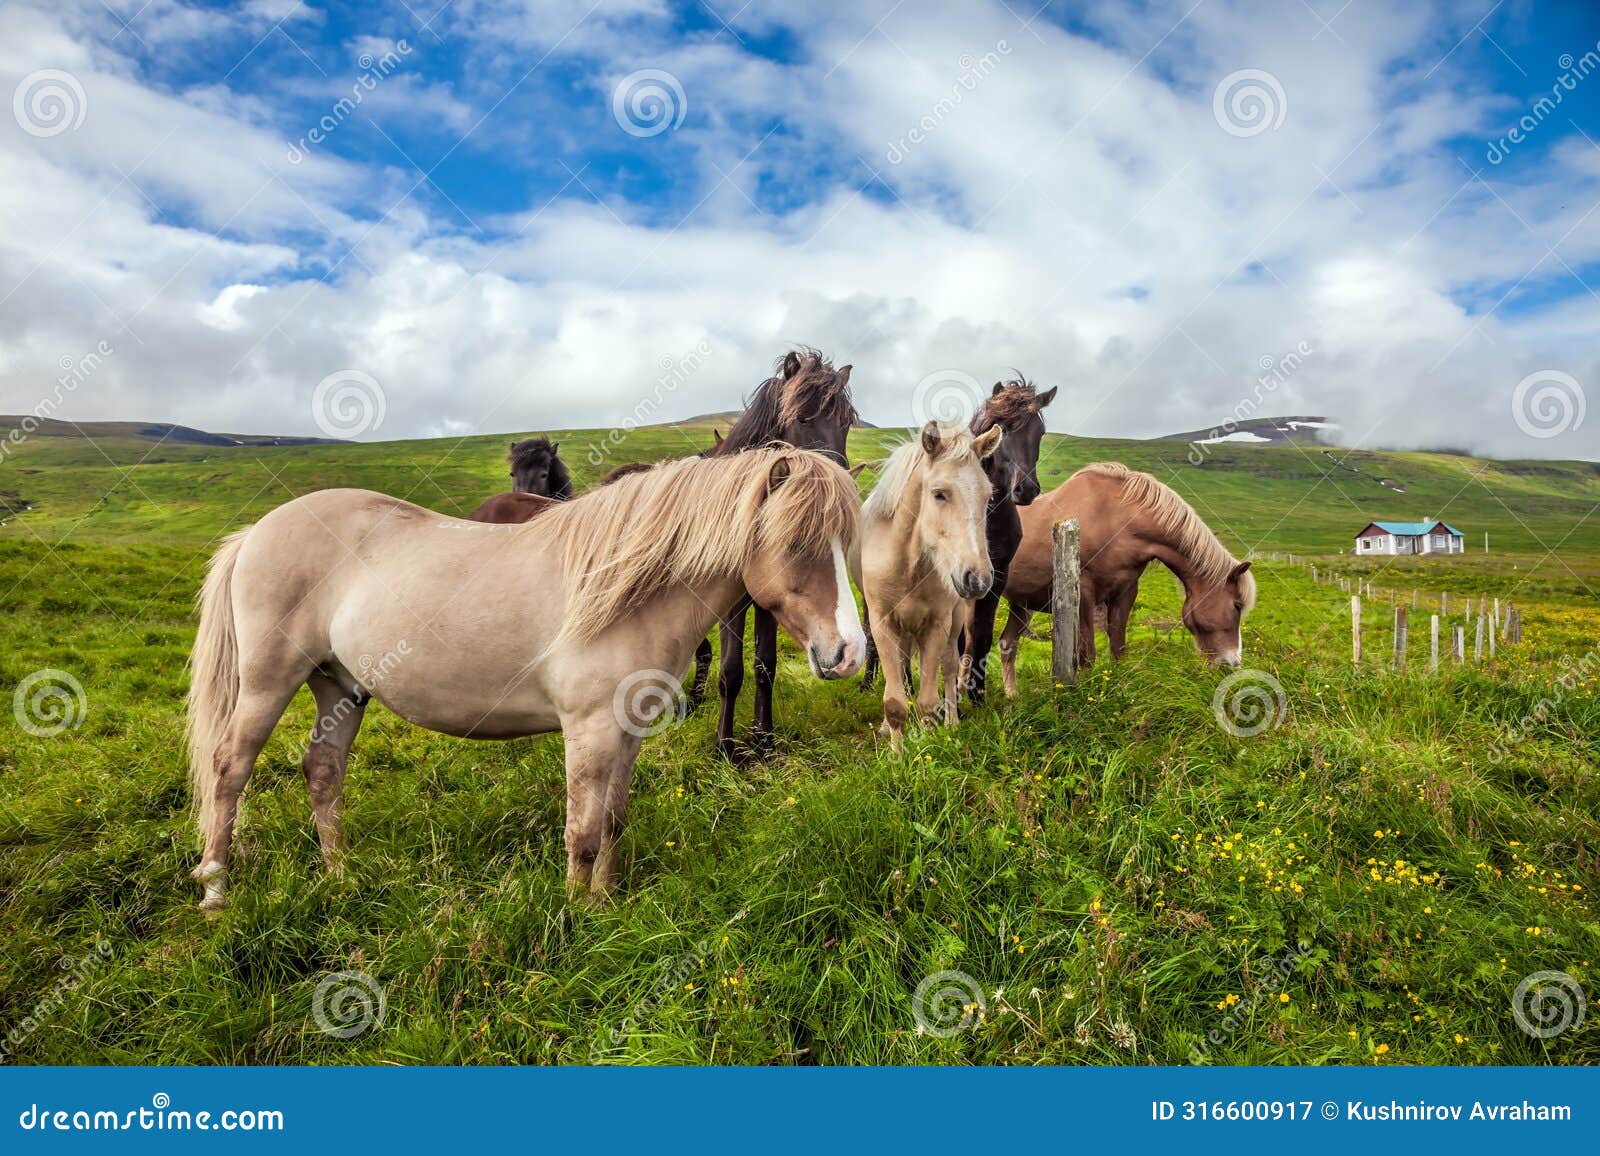 the horses grazes in the icelandic tundra